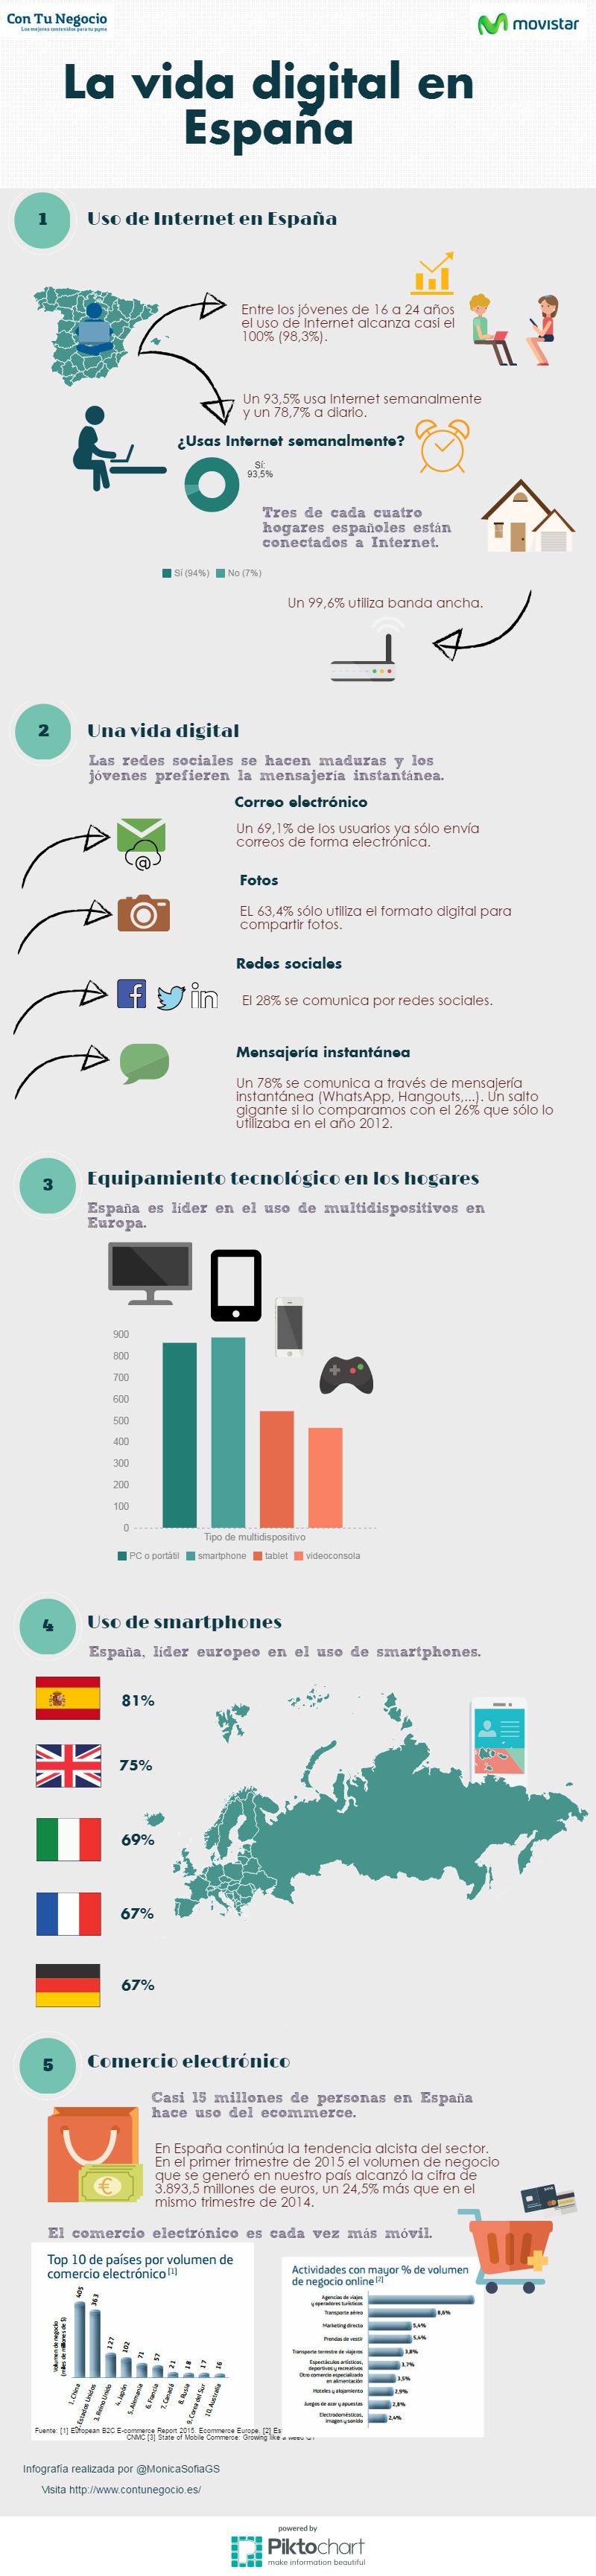 Infografía vida digital en España